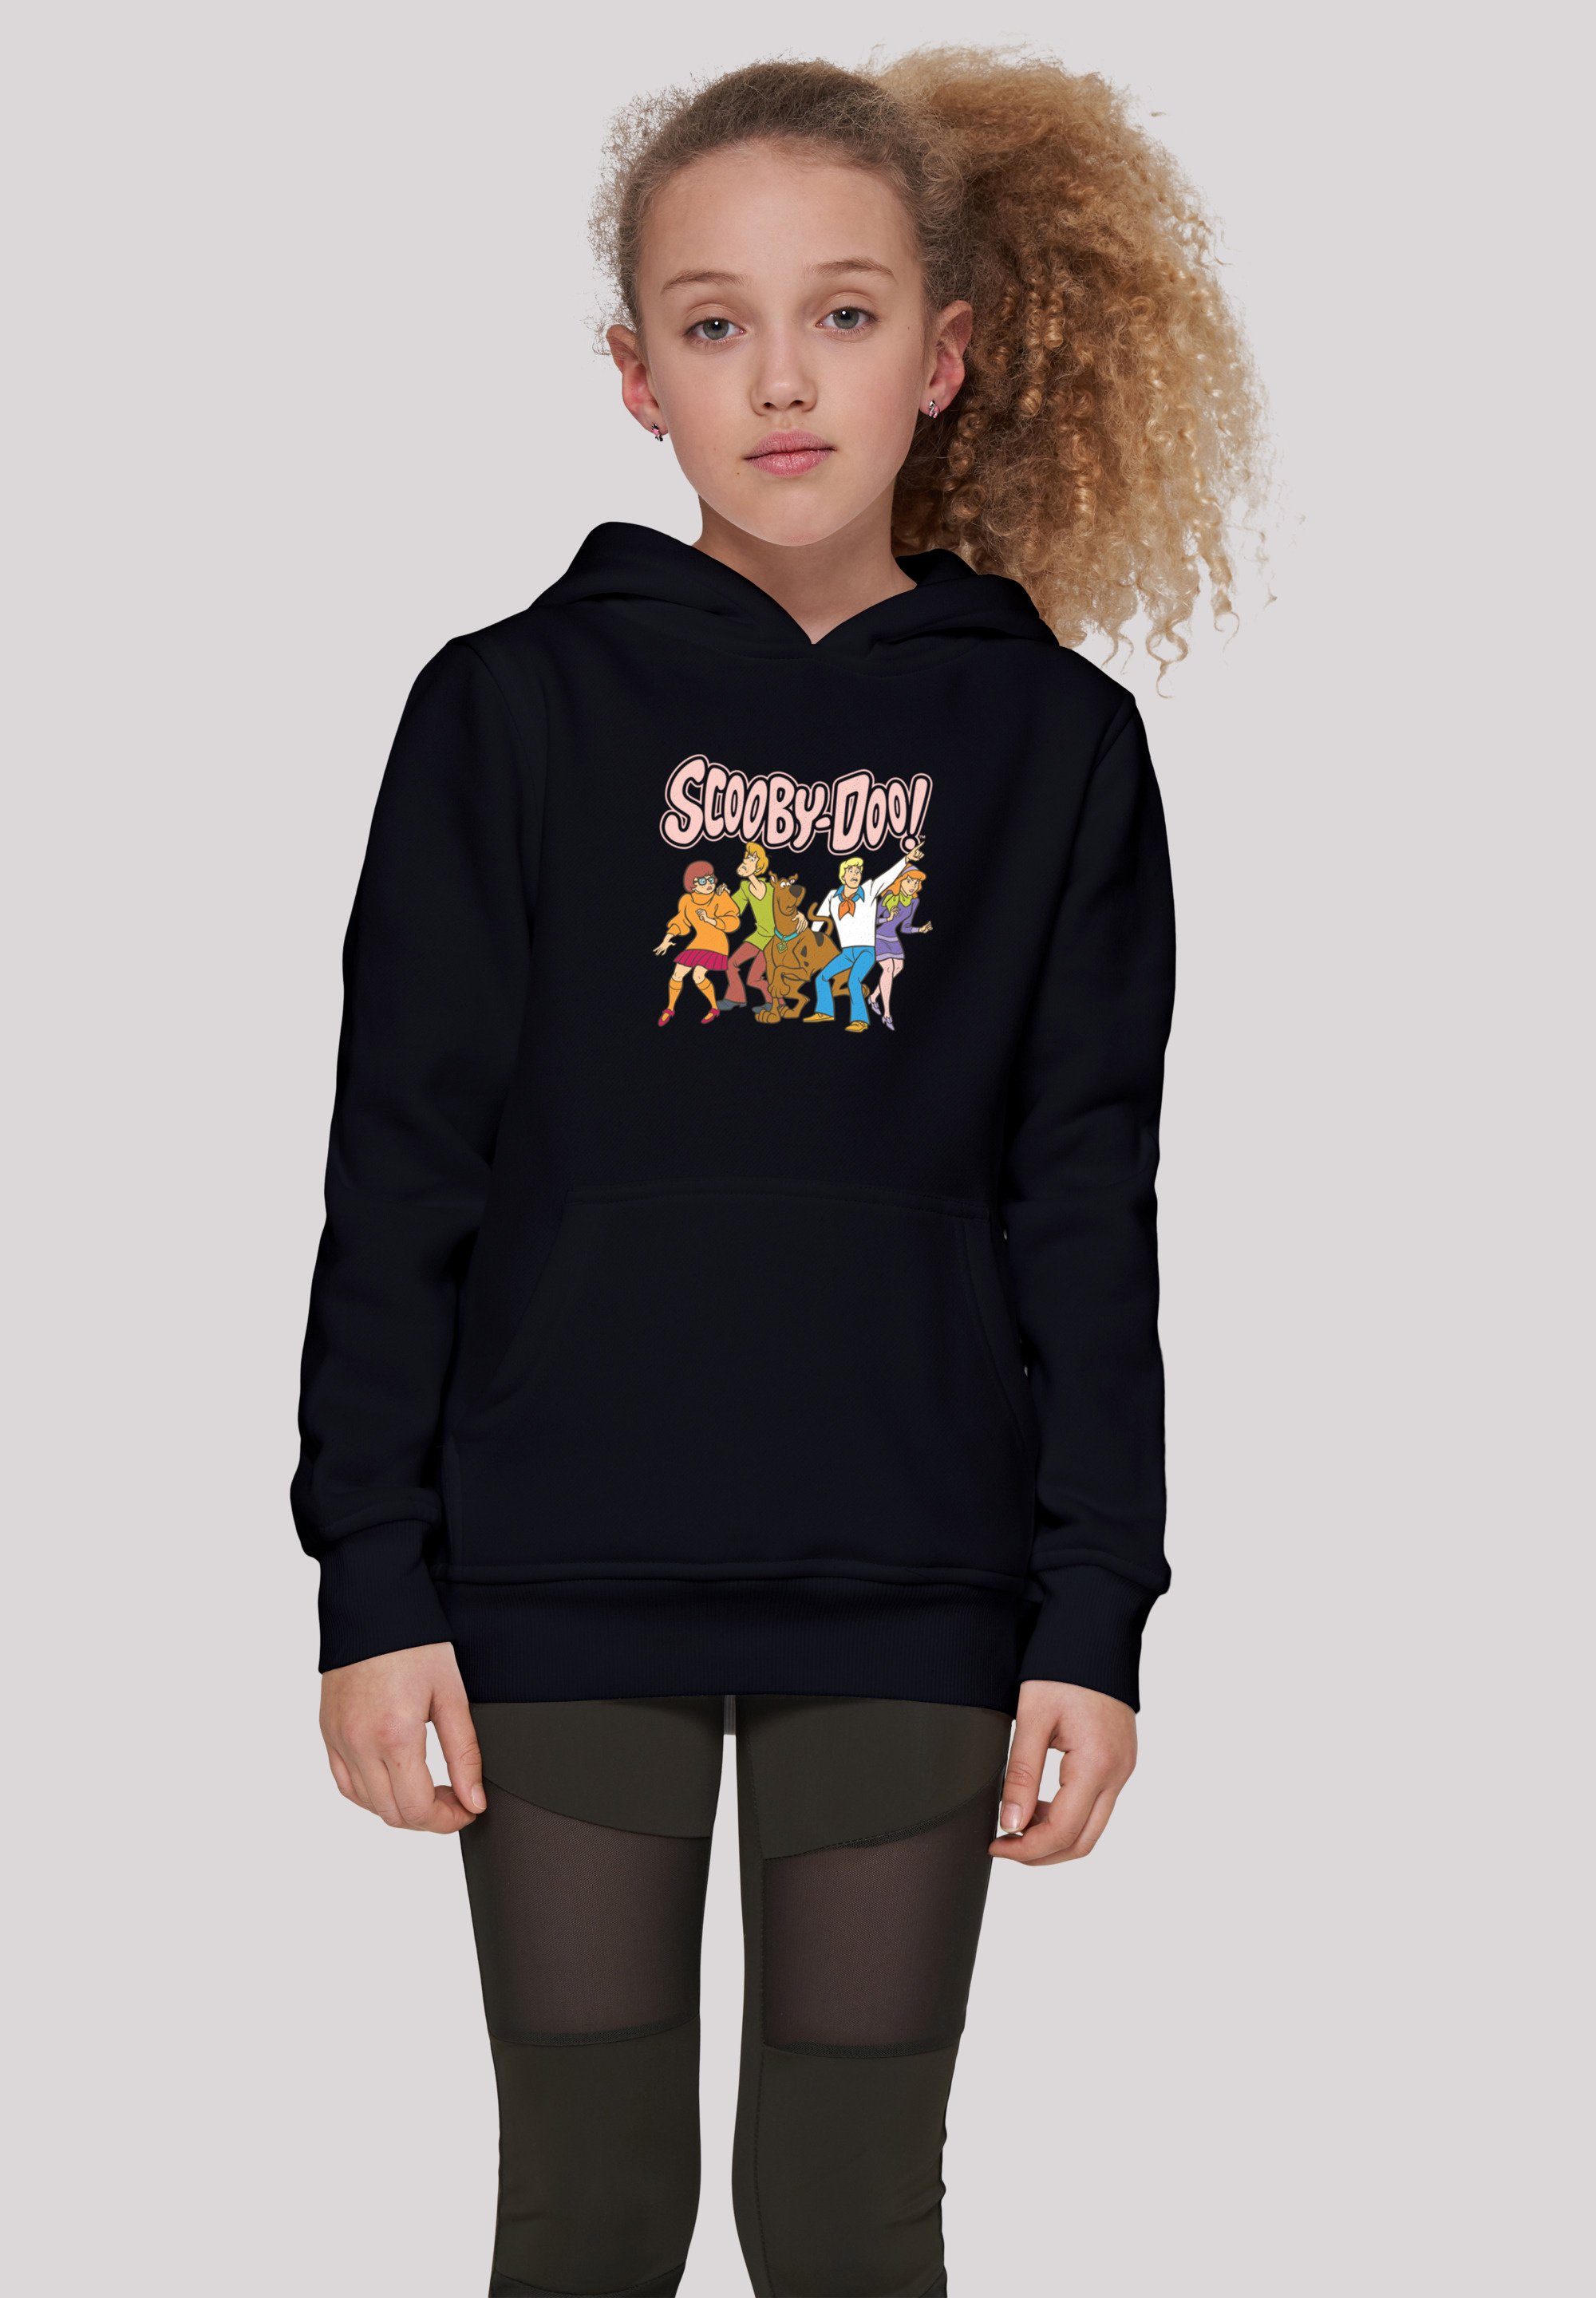 Merch,Jungen,Mädchen,Bedruckt F4NT4STIC Sweatshirt Kinder,Premium Scooby schwarz Classic Doo Unisex Group